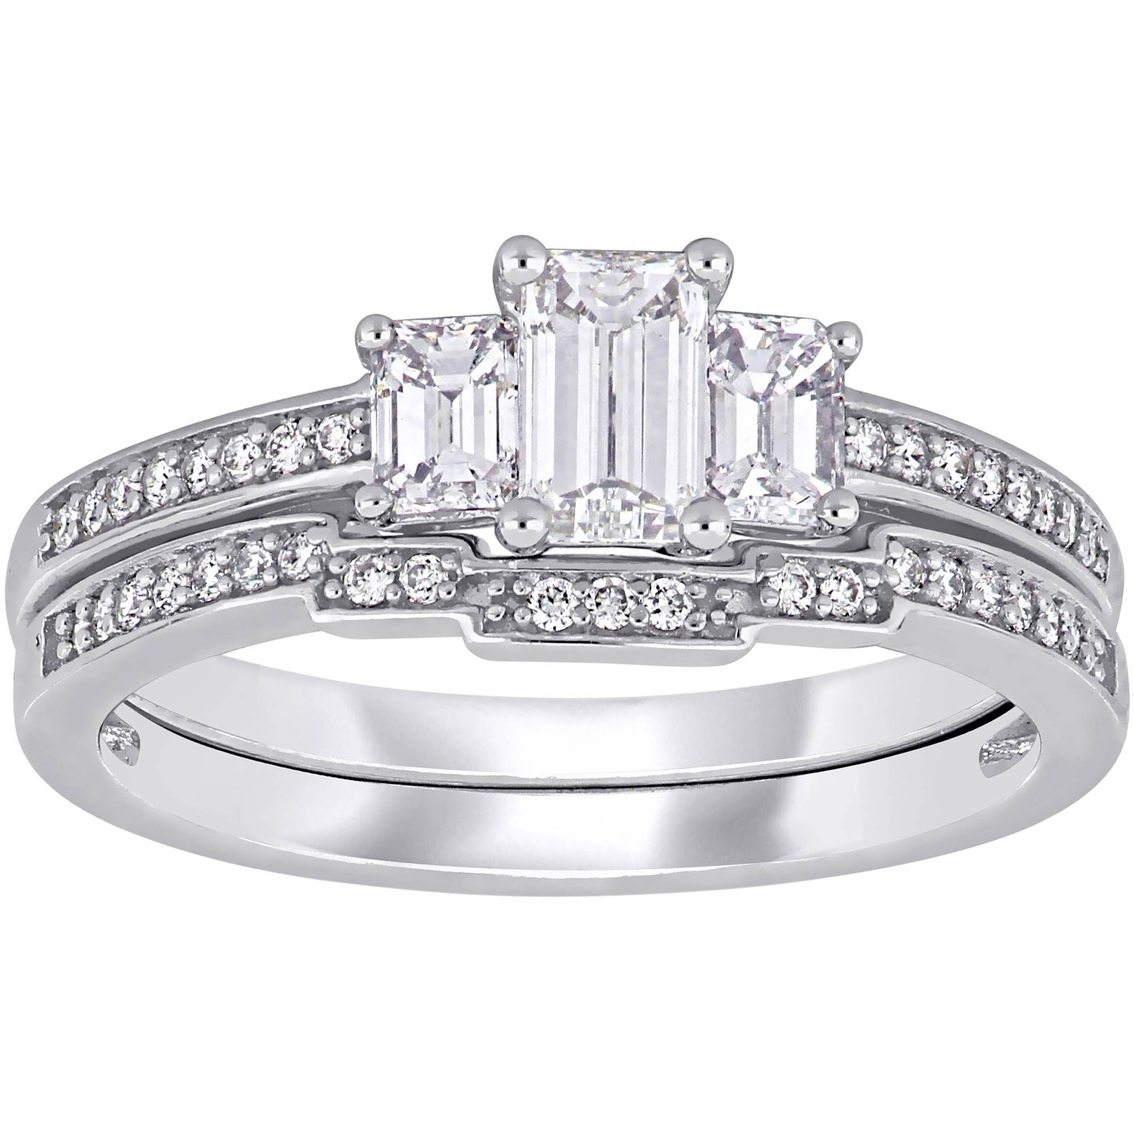 Certified 3-Stone Emerald Cut Diamond Engagement & Wedding Ring 14K White Gold 